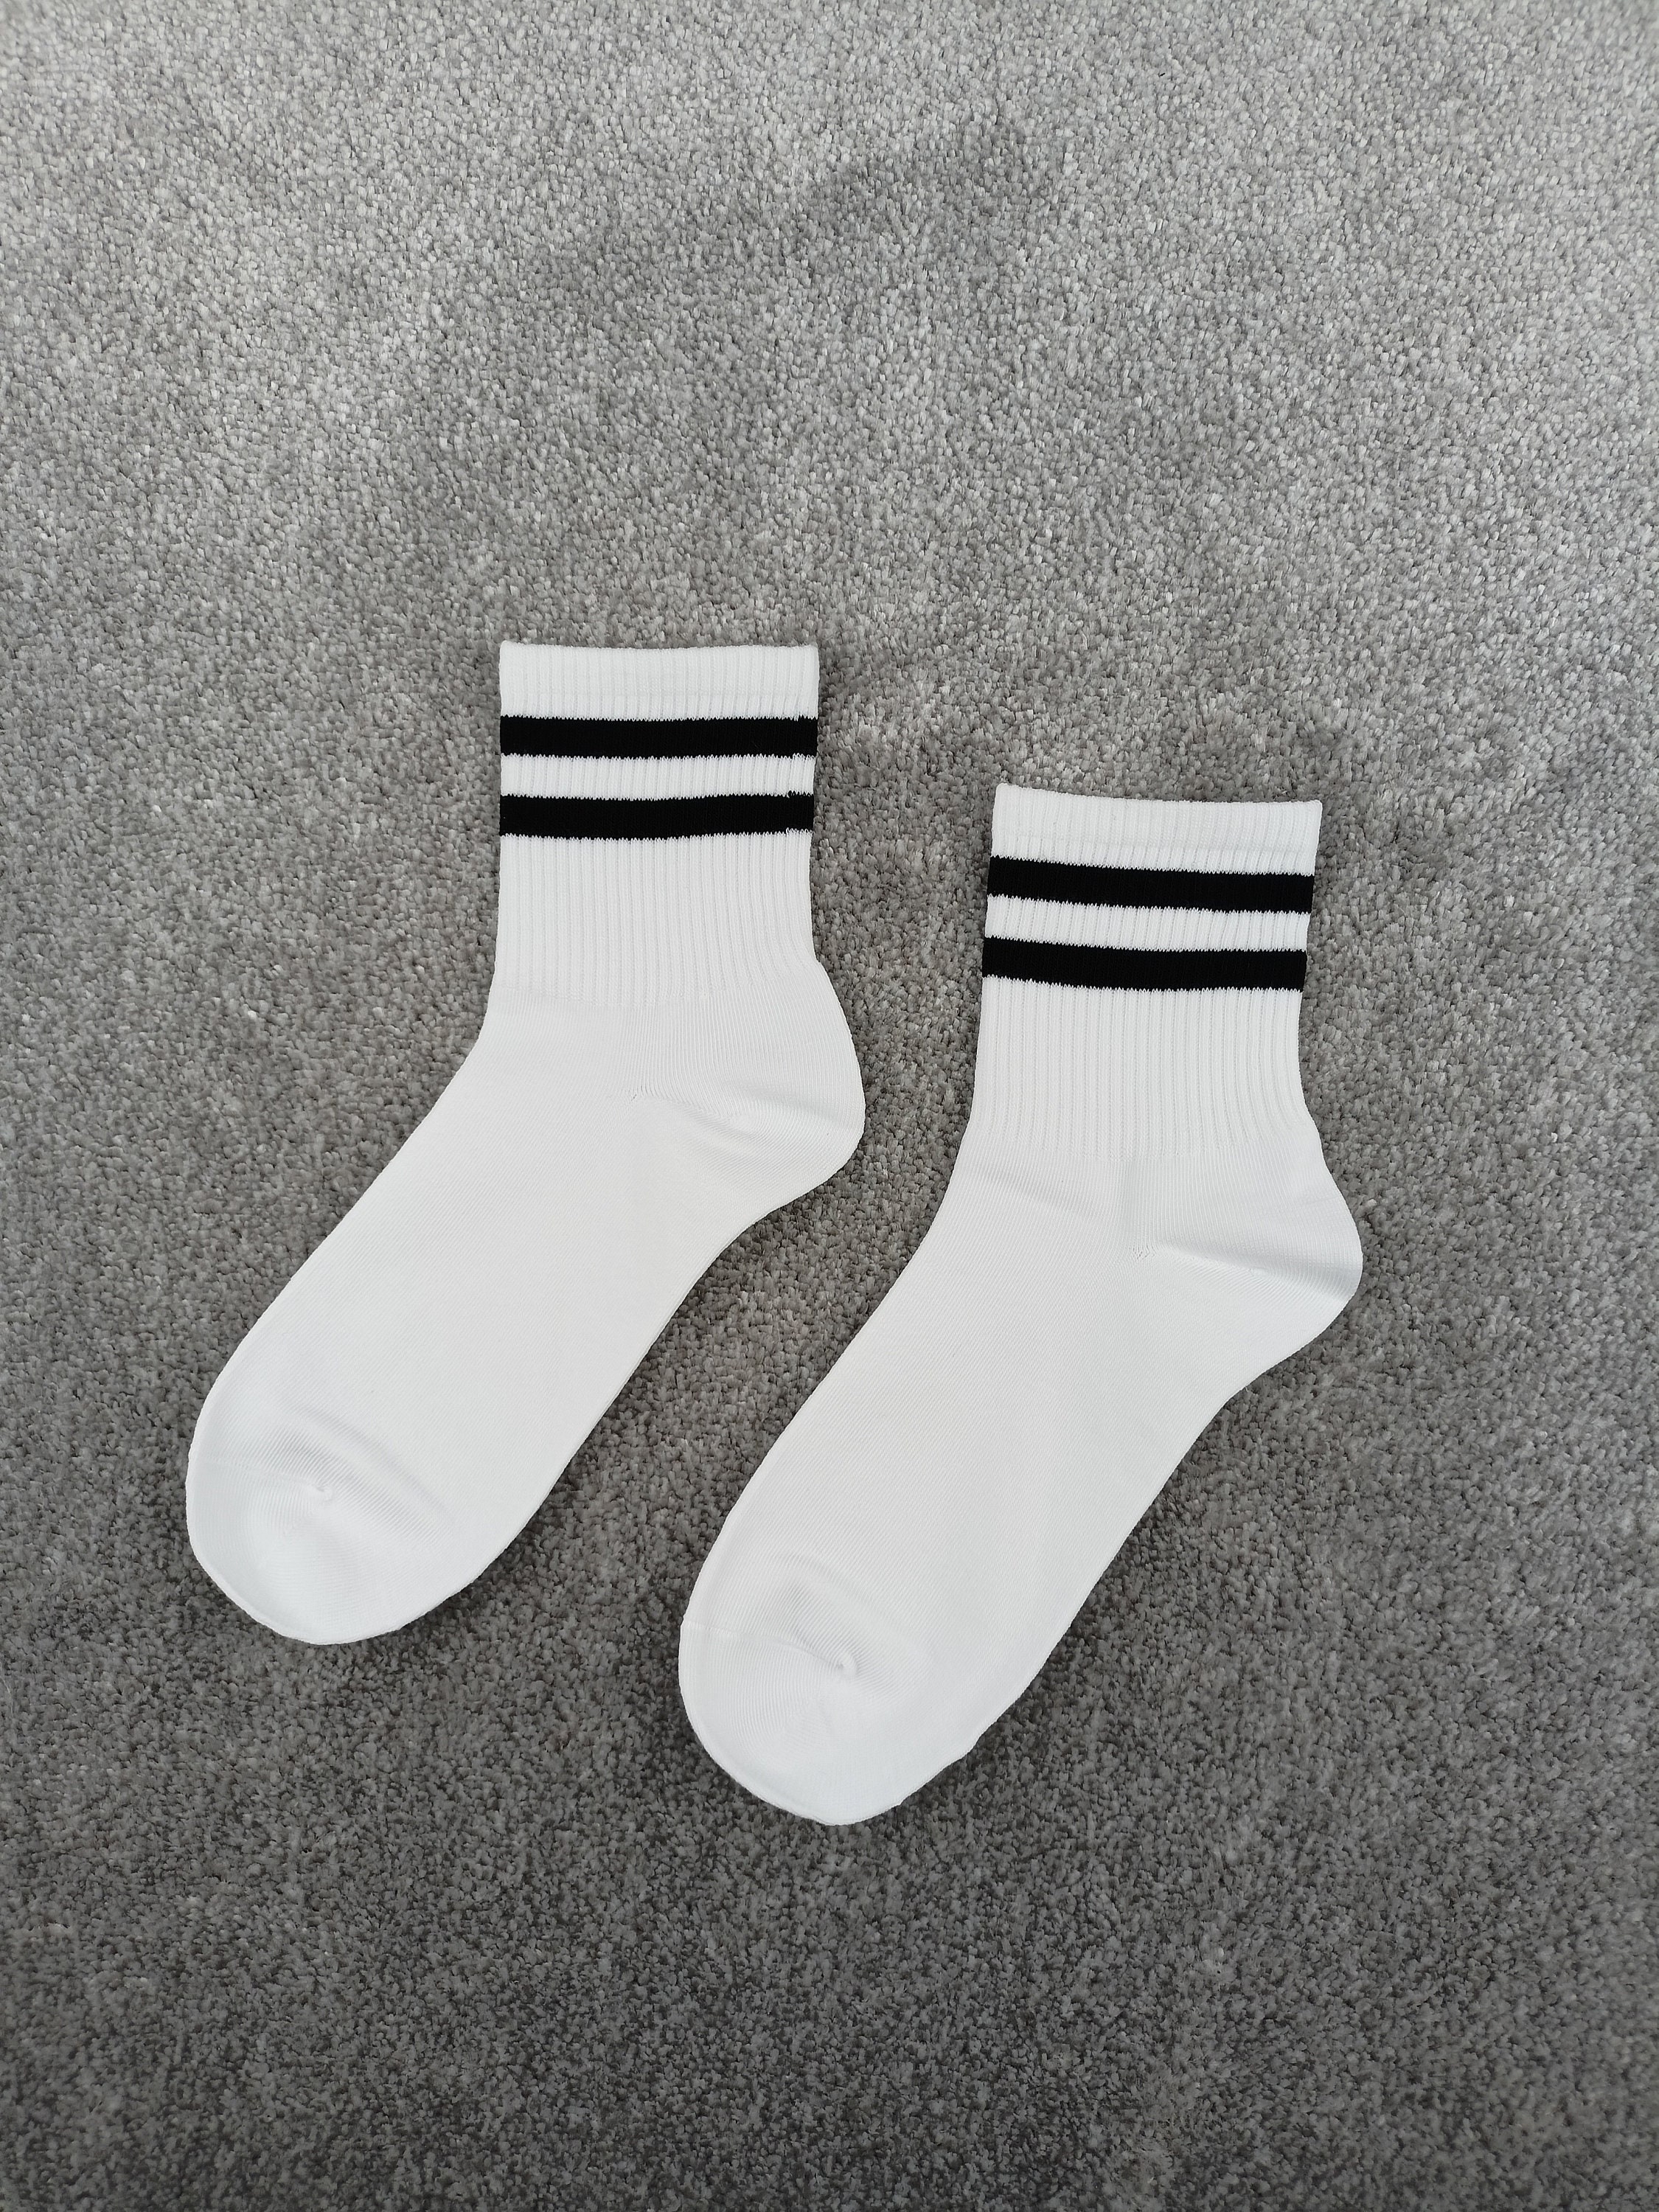  TuoTuoDi Street Fashion Socks Letter V tube cotton socks for  men and women Hip Hop skateboarding stockings : Clothing, Shoes & Jewelry